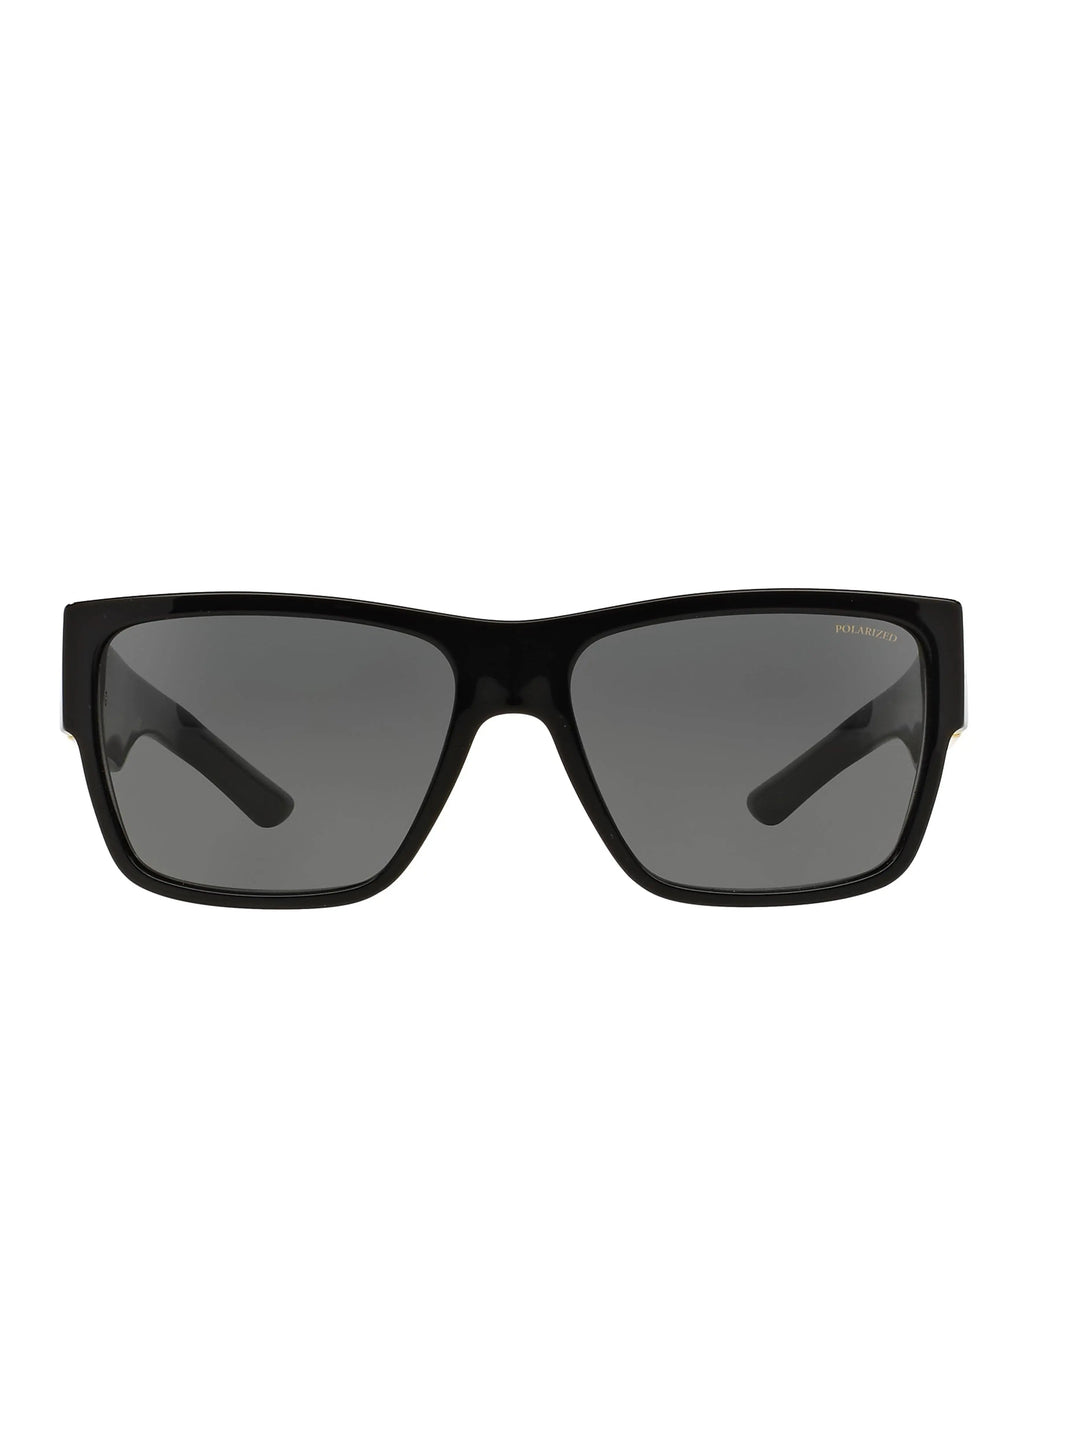 Versace VE4296 GB1/87 Sunglasses Prior